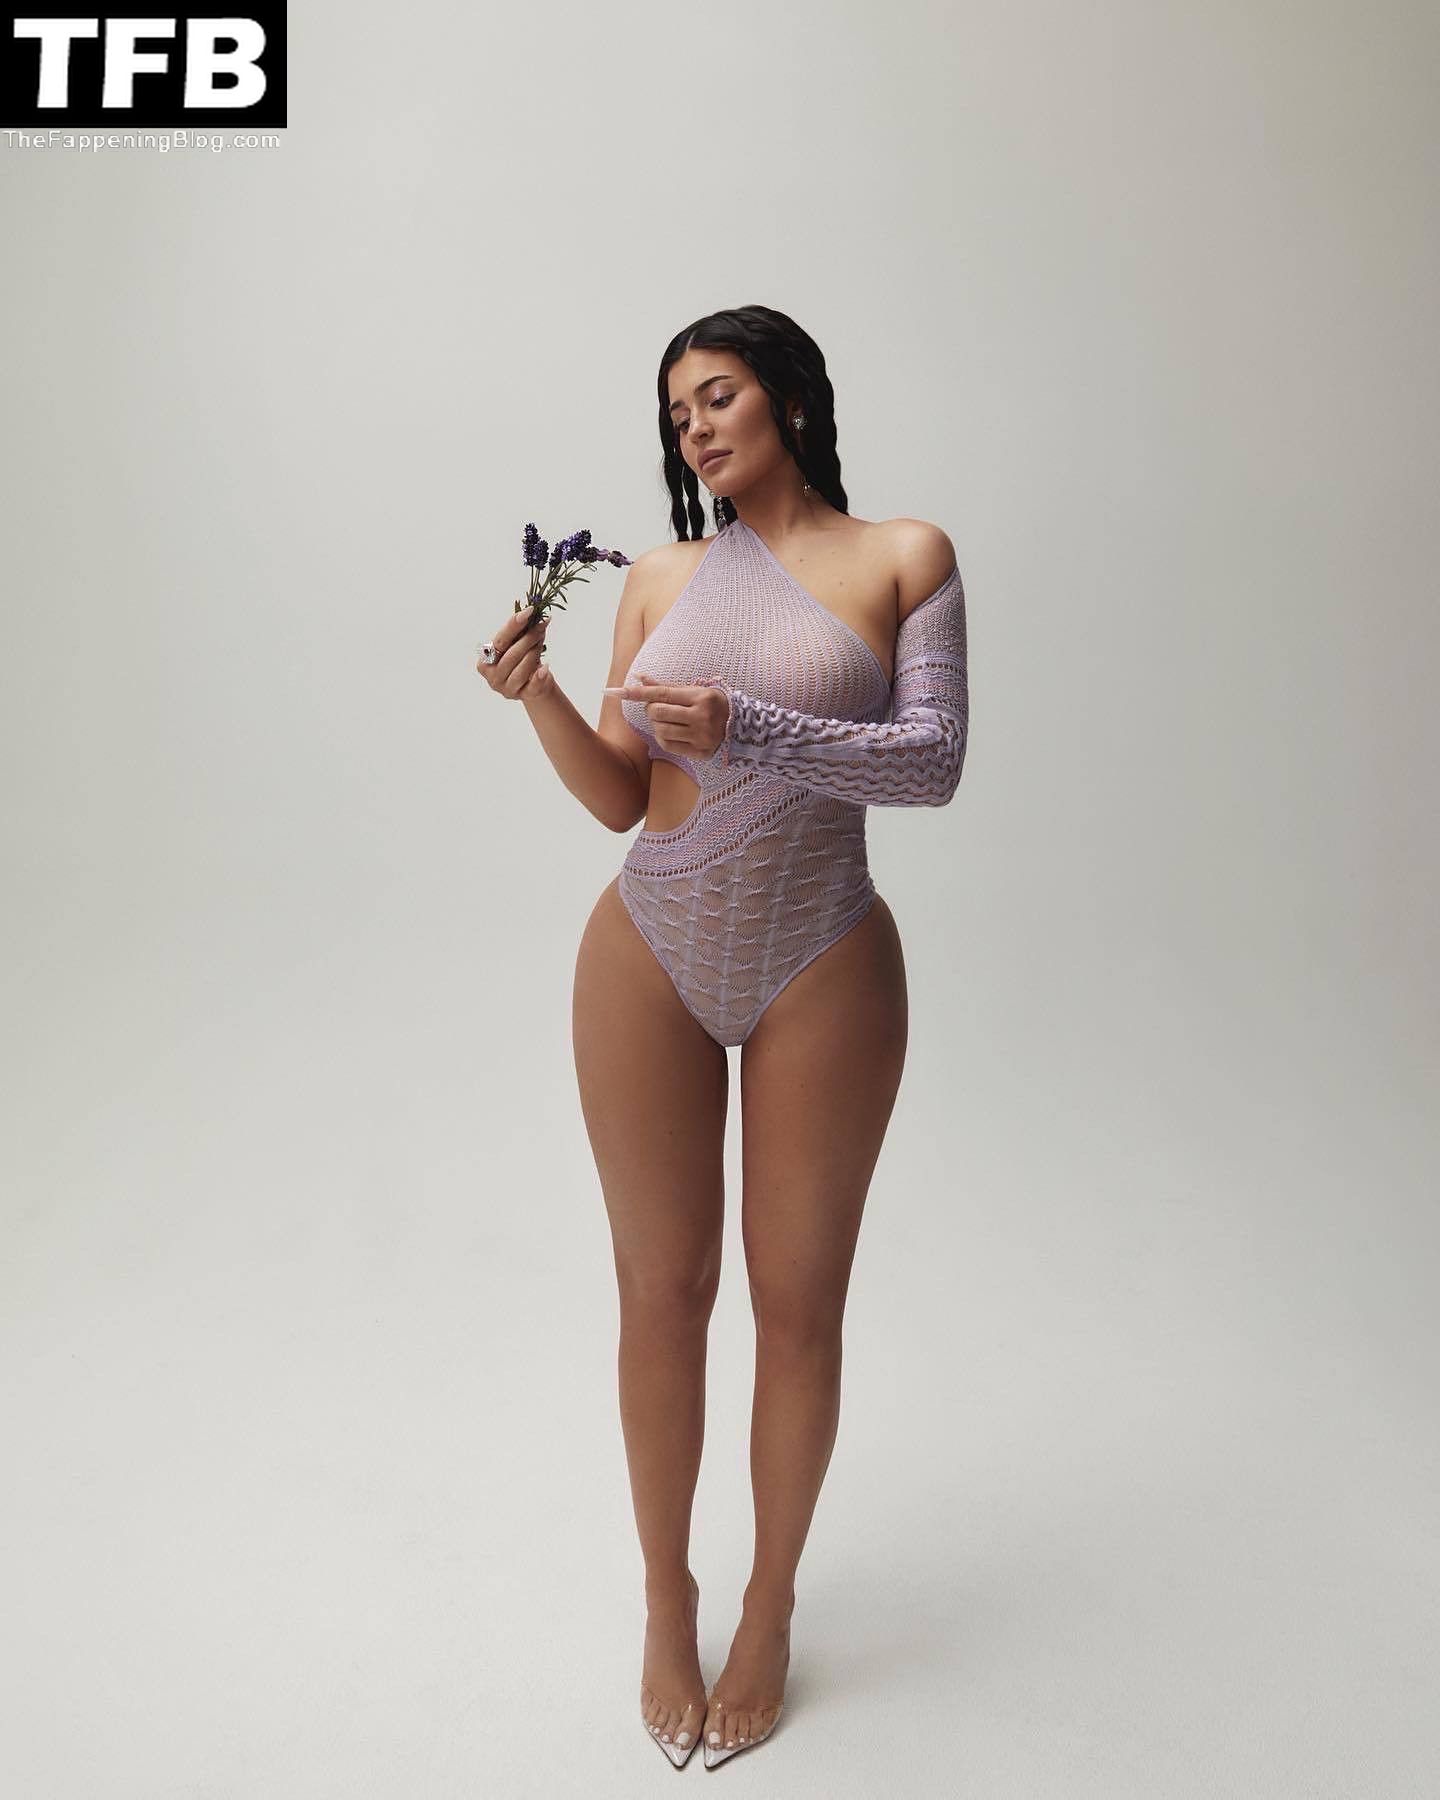 Kylie Jenner Sexy (13 Hot Photos)